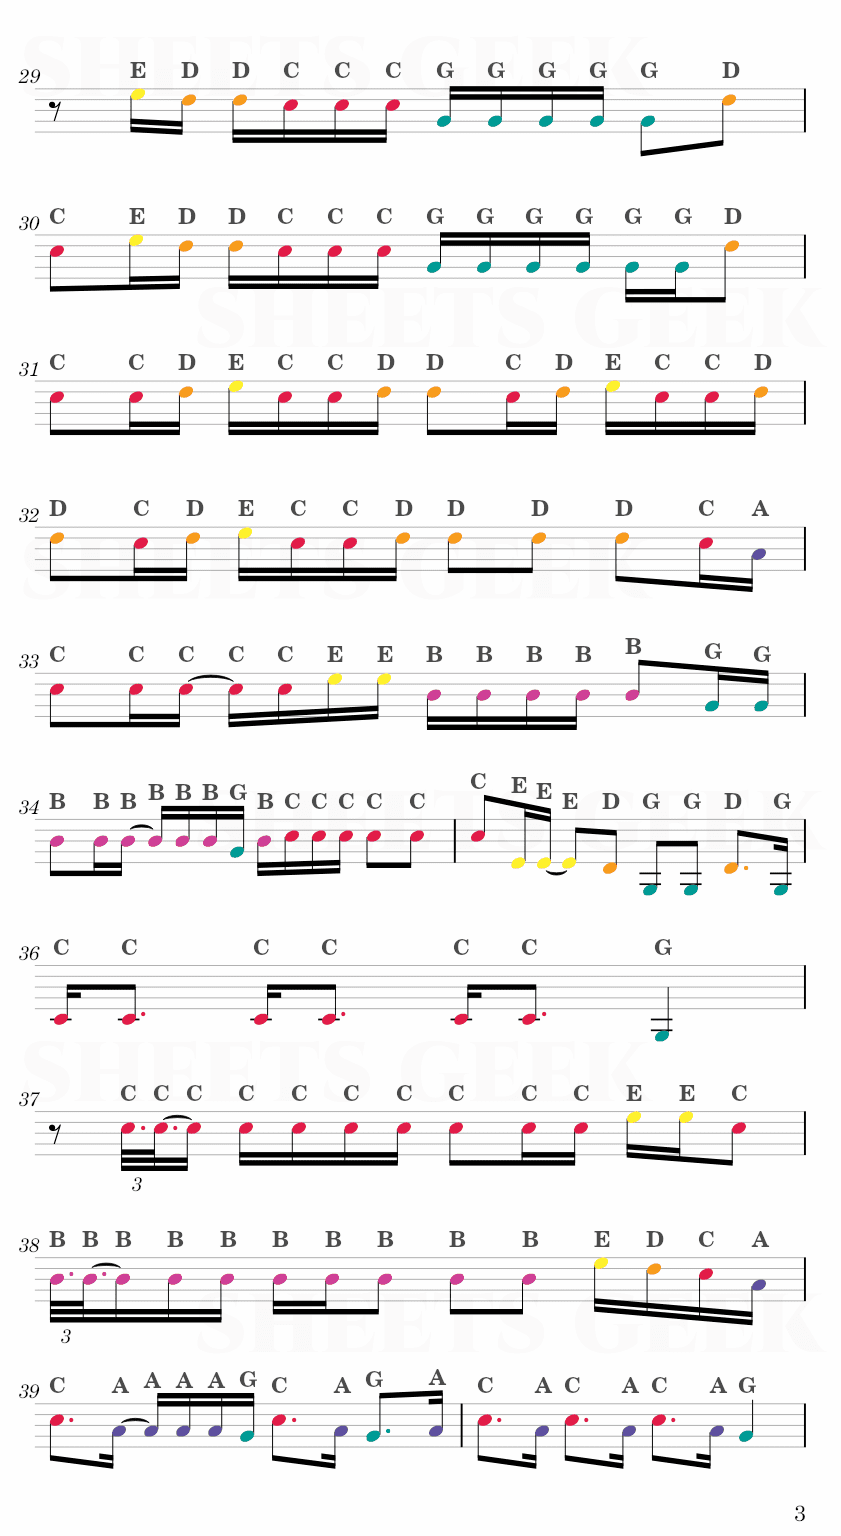 DARARI - TREASURE Easy Sheet Music Free for piano, keyboard, flute, violin, sax, cello page 3